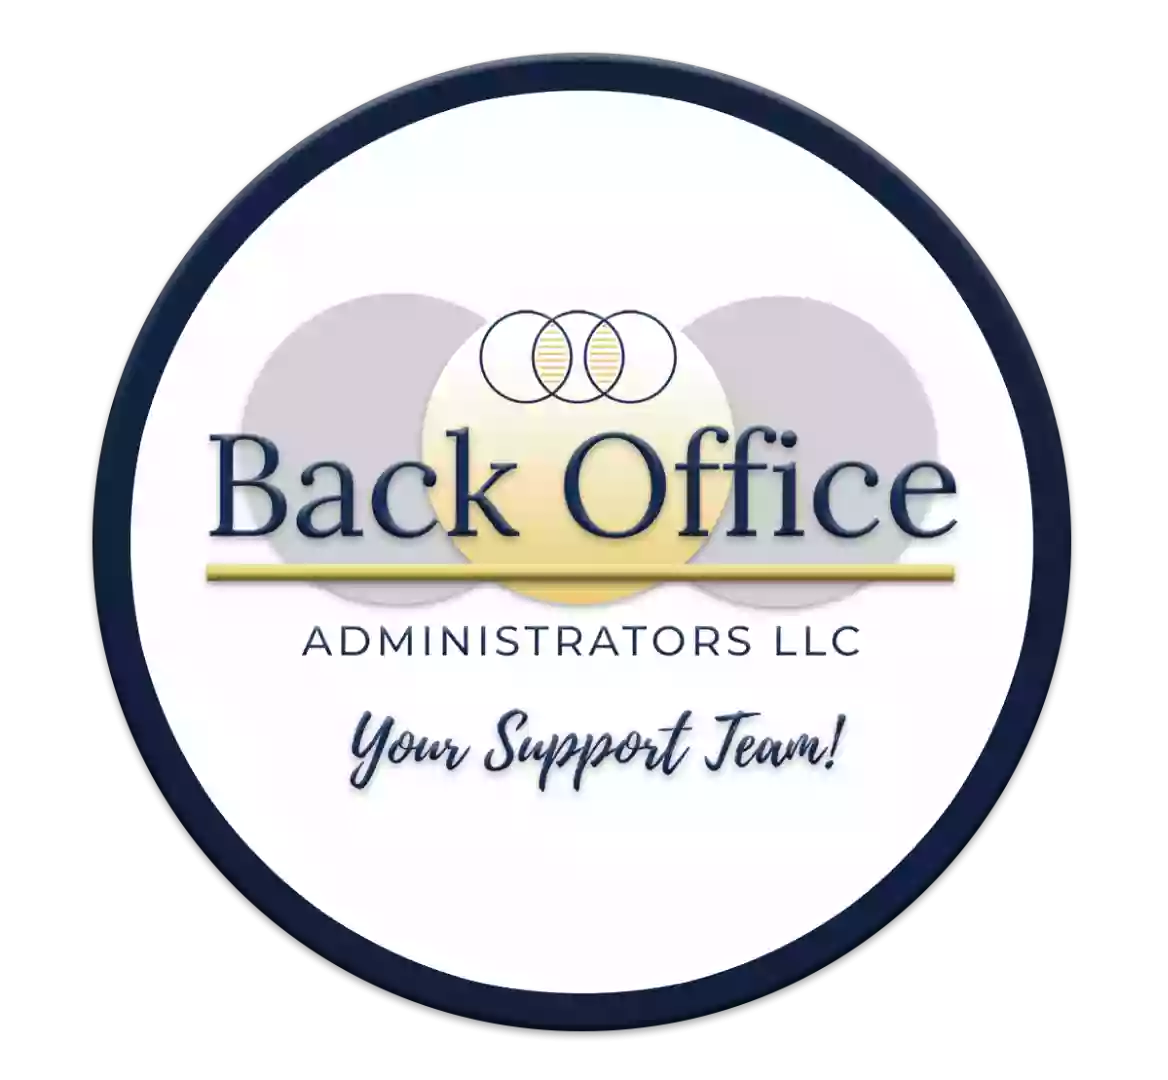 Back Office Administrators